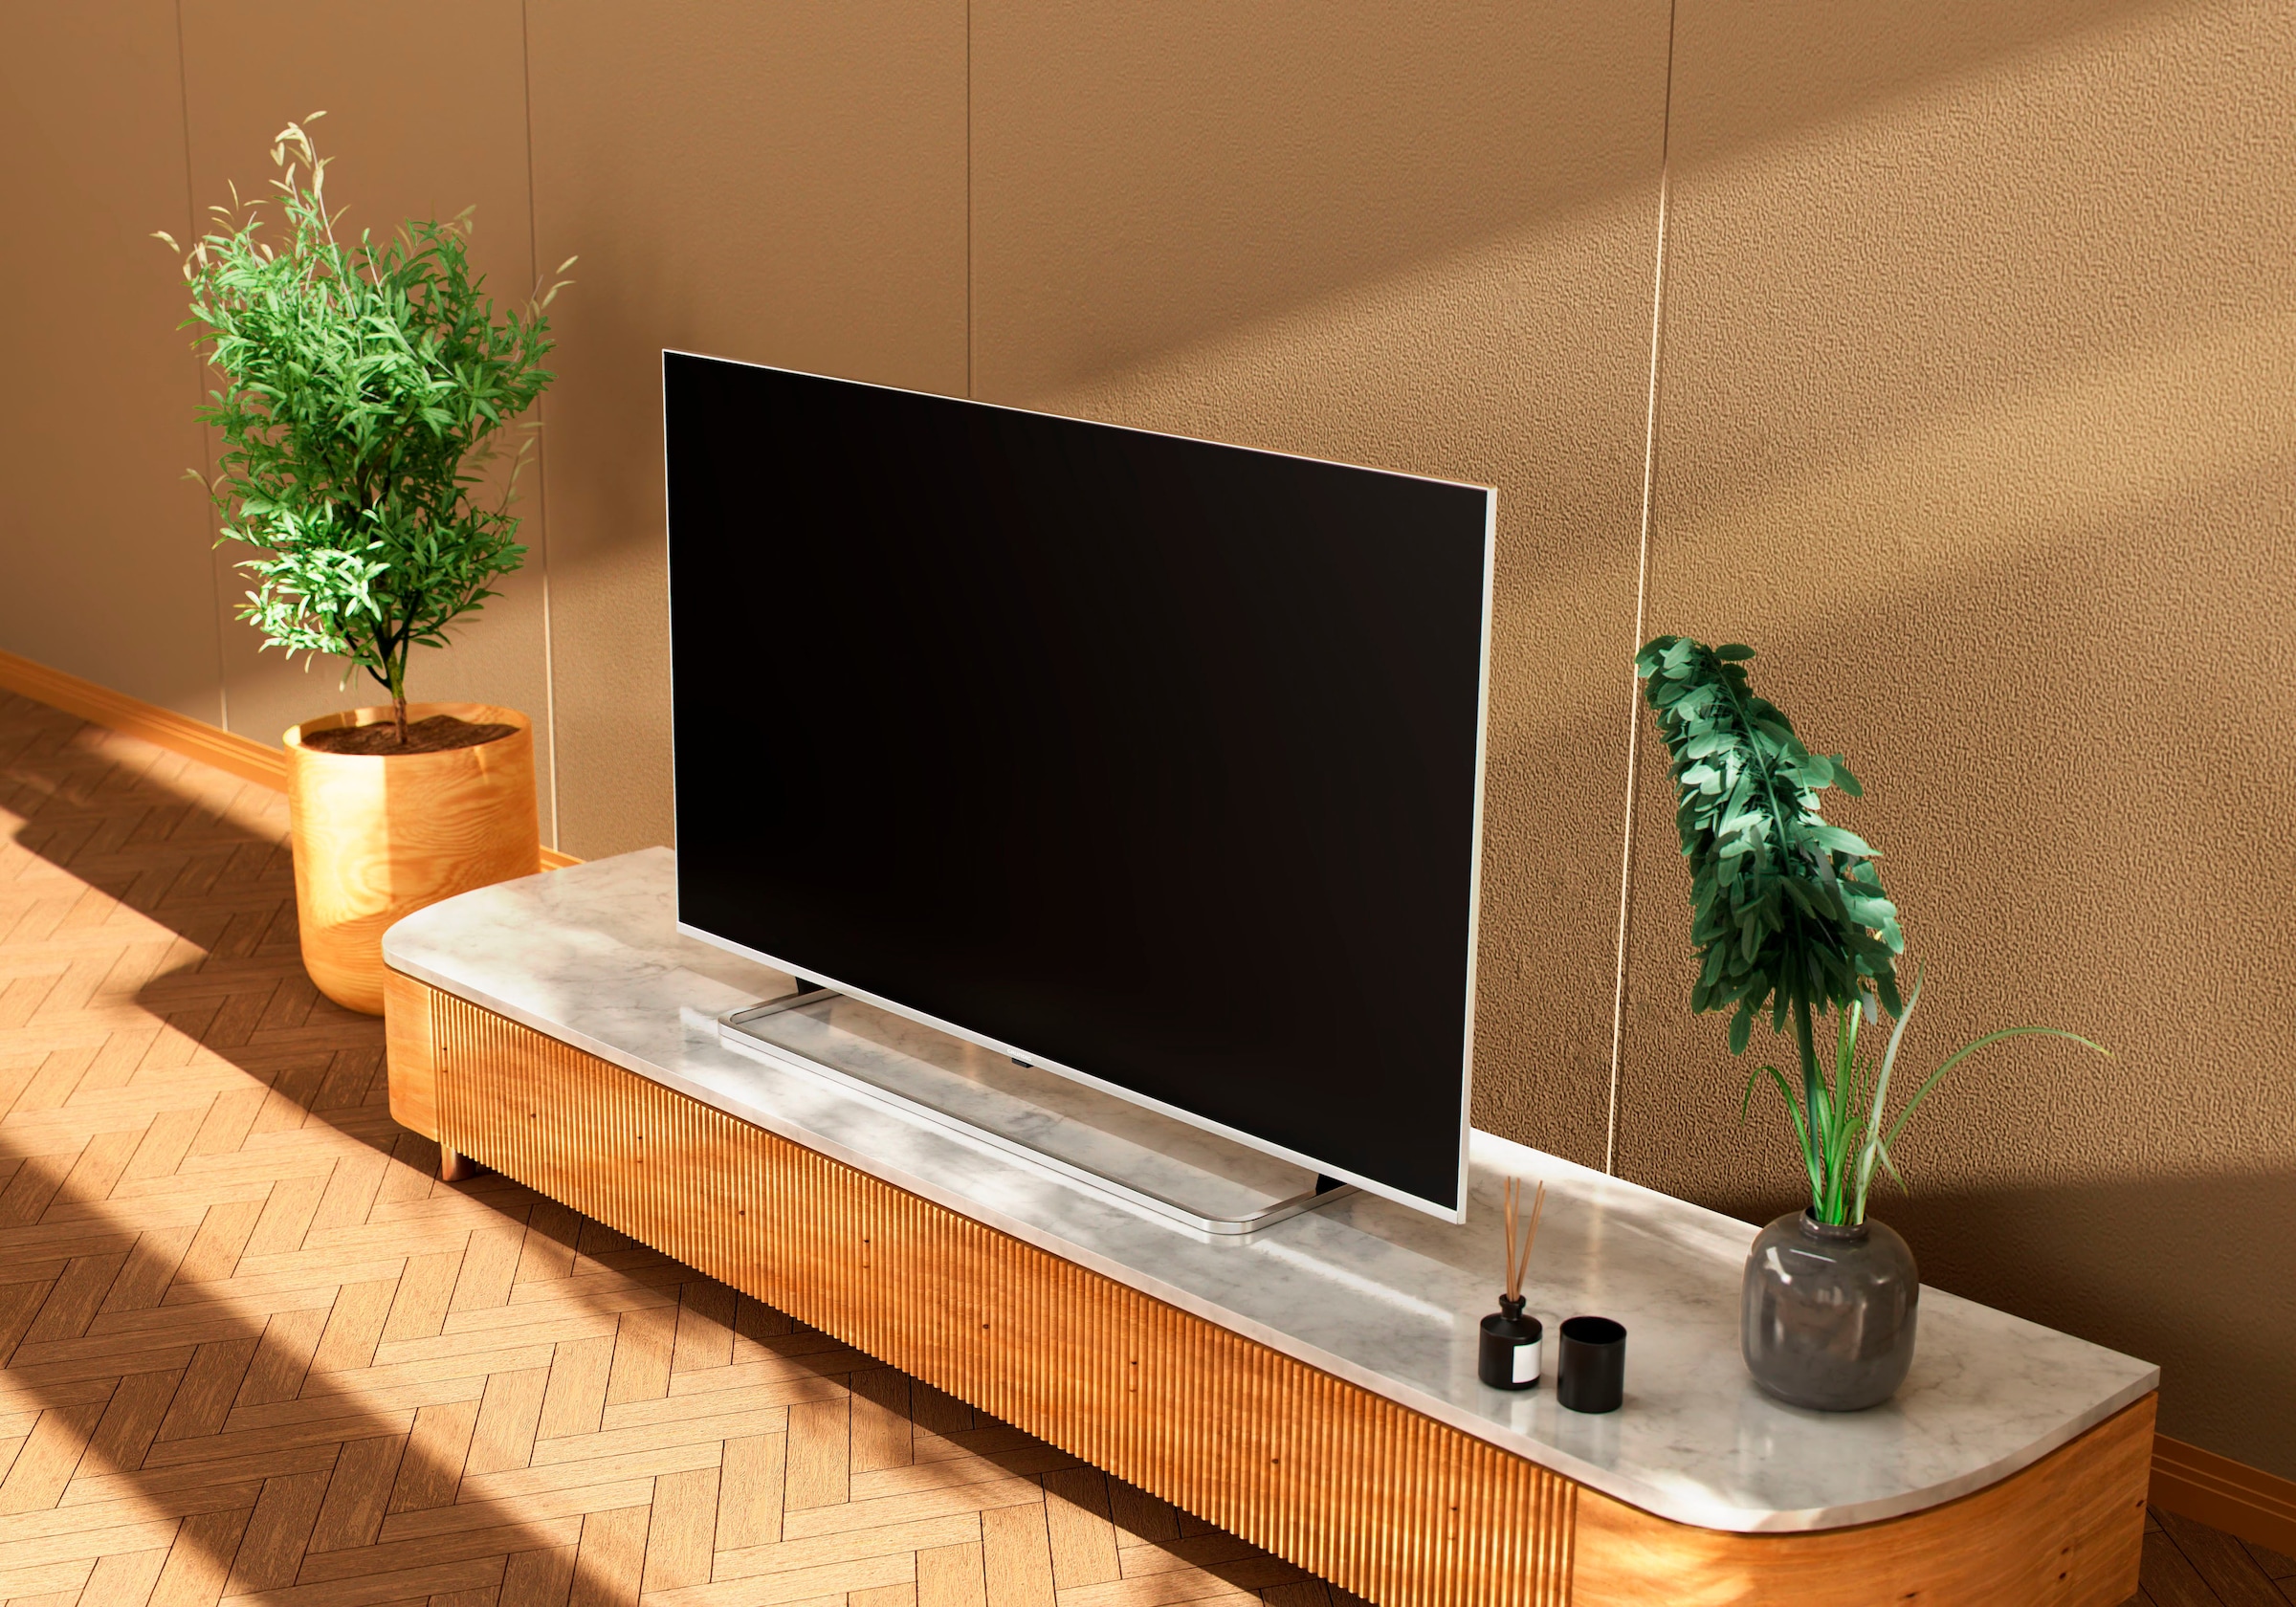 Grundig LED-Fernseher, 164 cm/65 Zoll, 4K Ultra HD, Google TV-Smart-TV